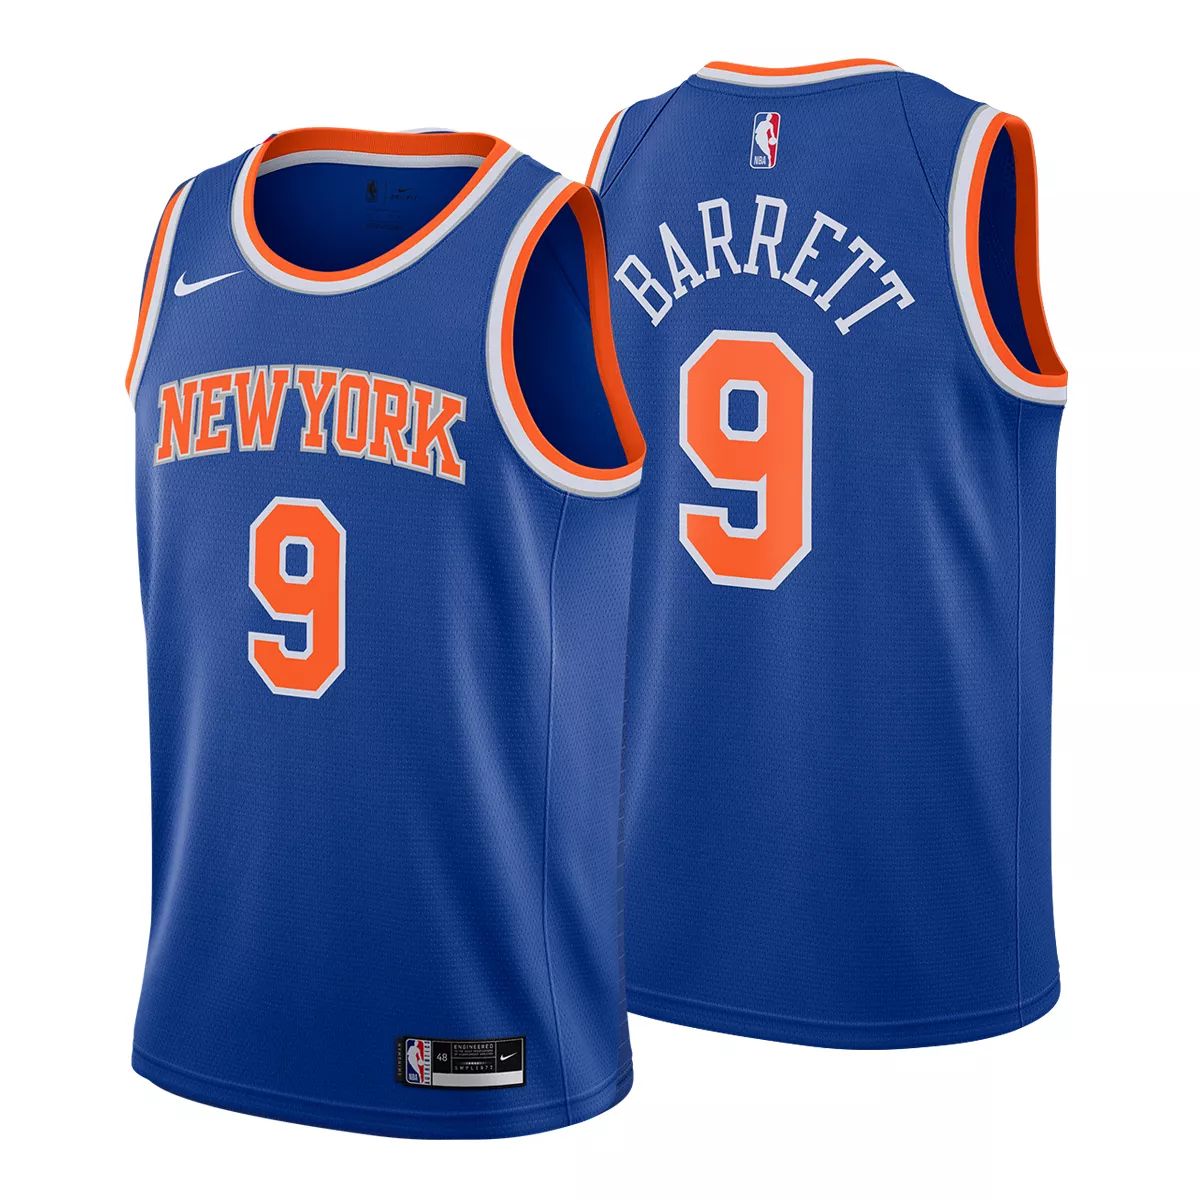 Men's New York Knicks 9 RJ Barrett NBA Swingman Basketball Jersey